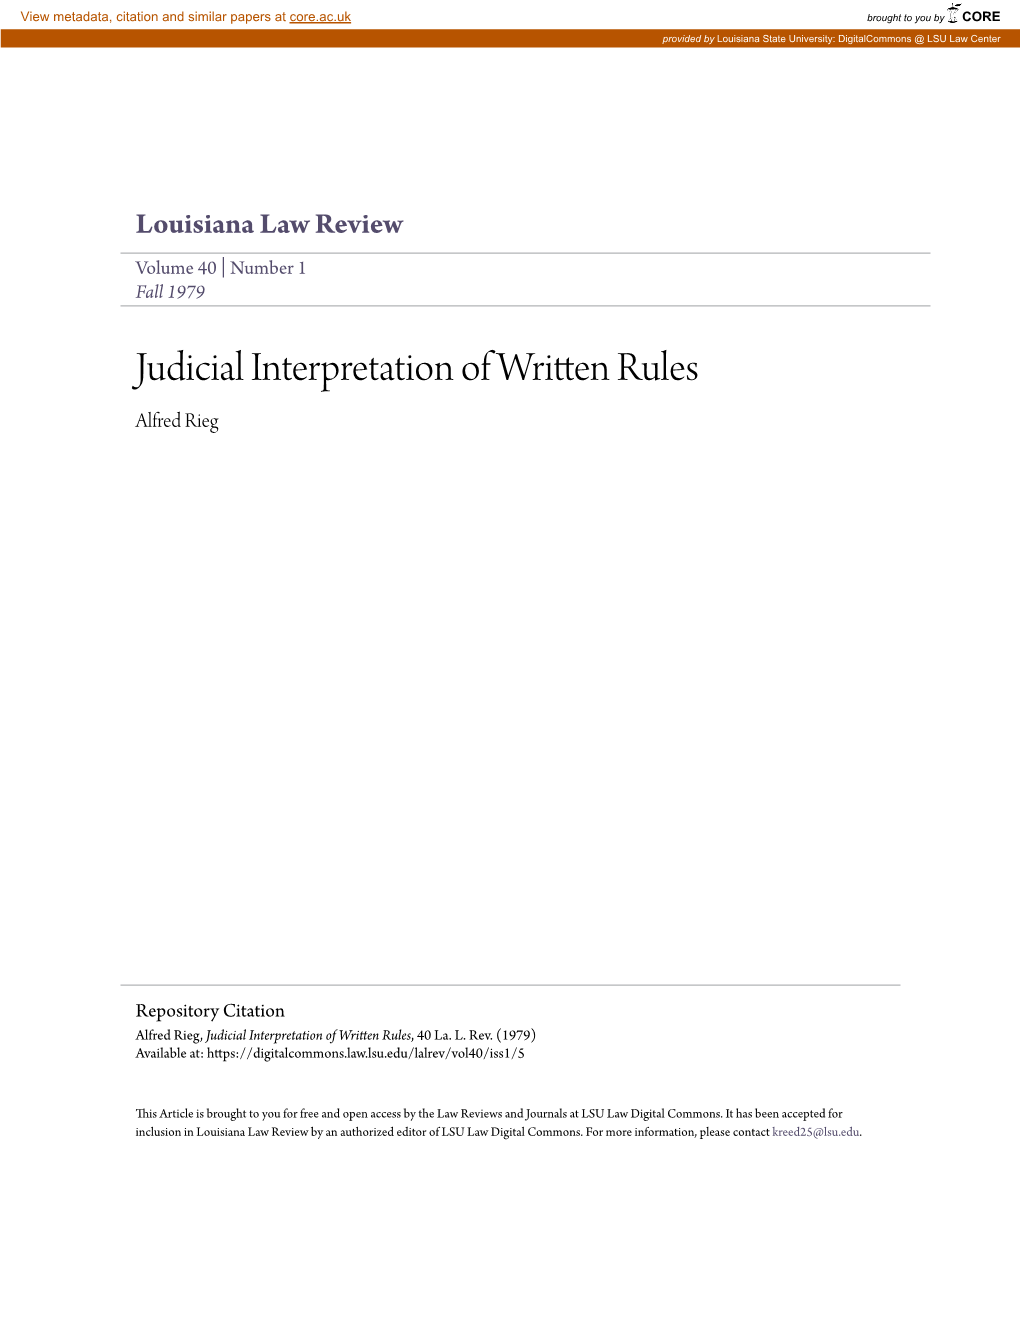 Judicial Interpretation of Written Rules Alfred Rieg